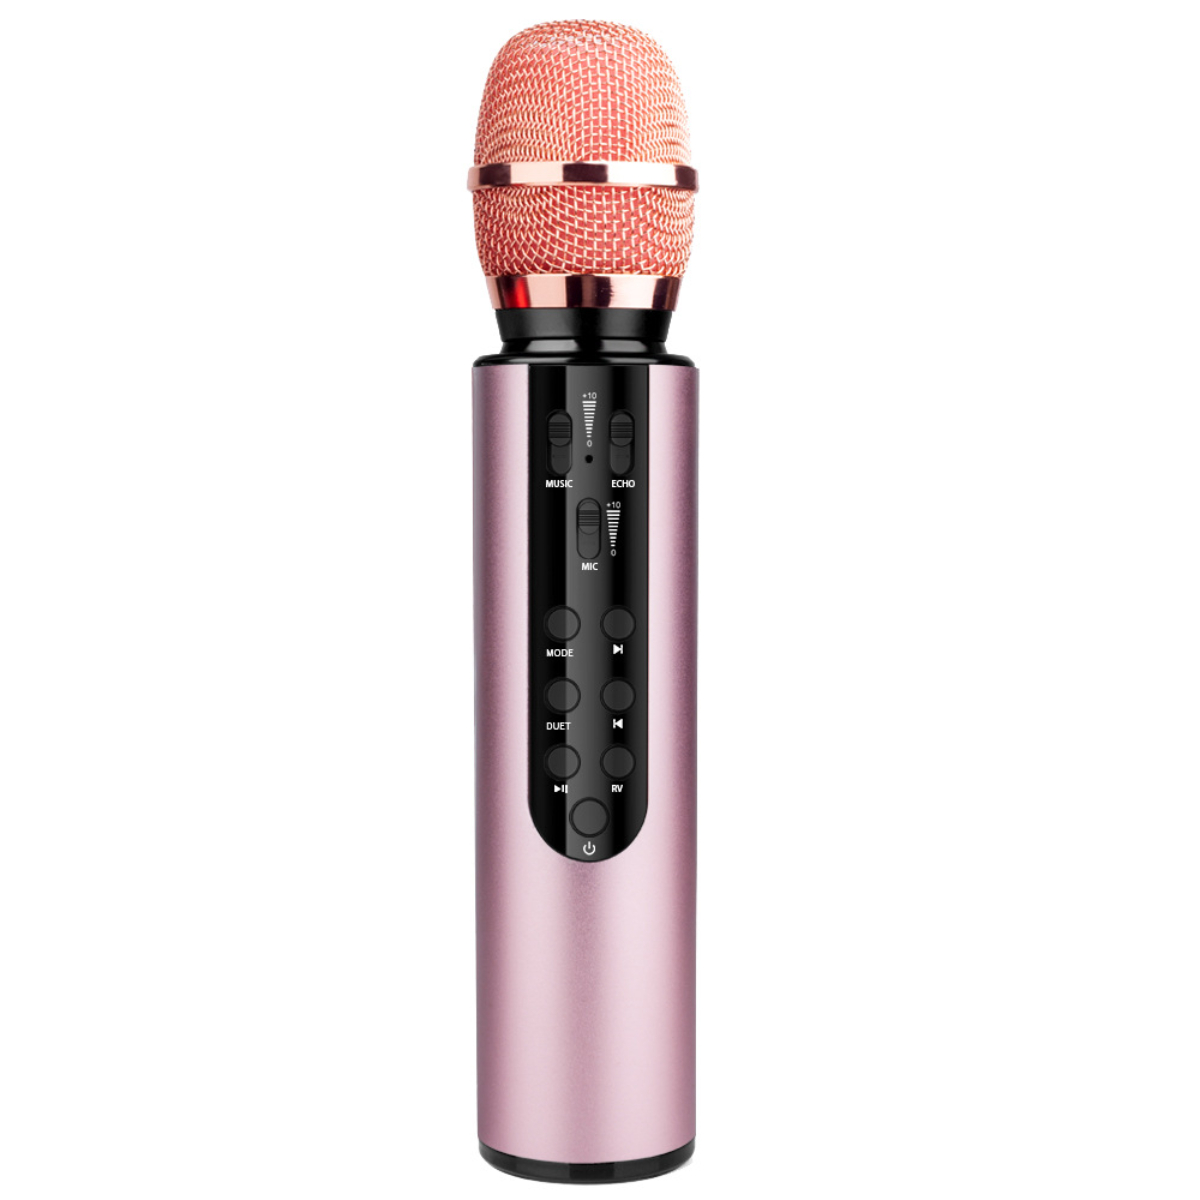 SYNTEK Microphone Gold Bluetooth Wireless Microphone Hosting Mikrofon Capacitive Gold All-in-One Mikrofon Lautsprecher